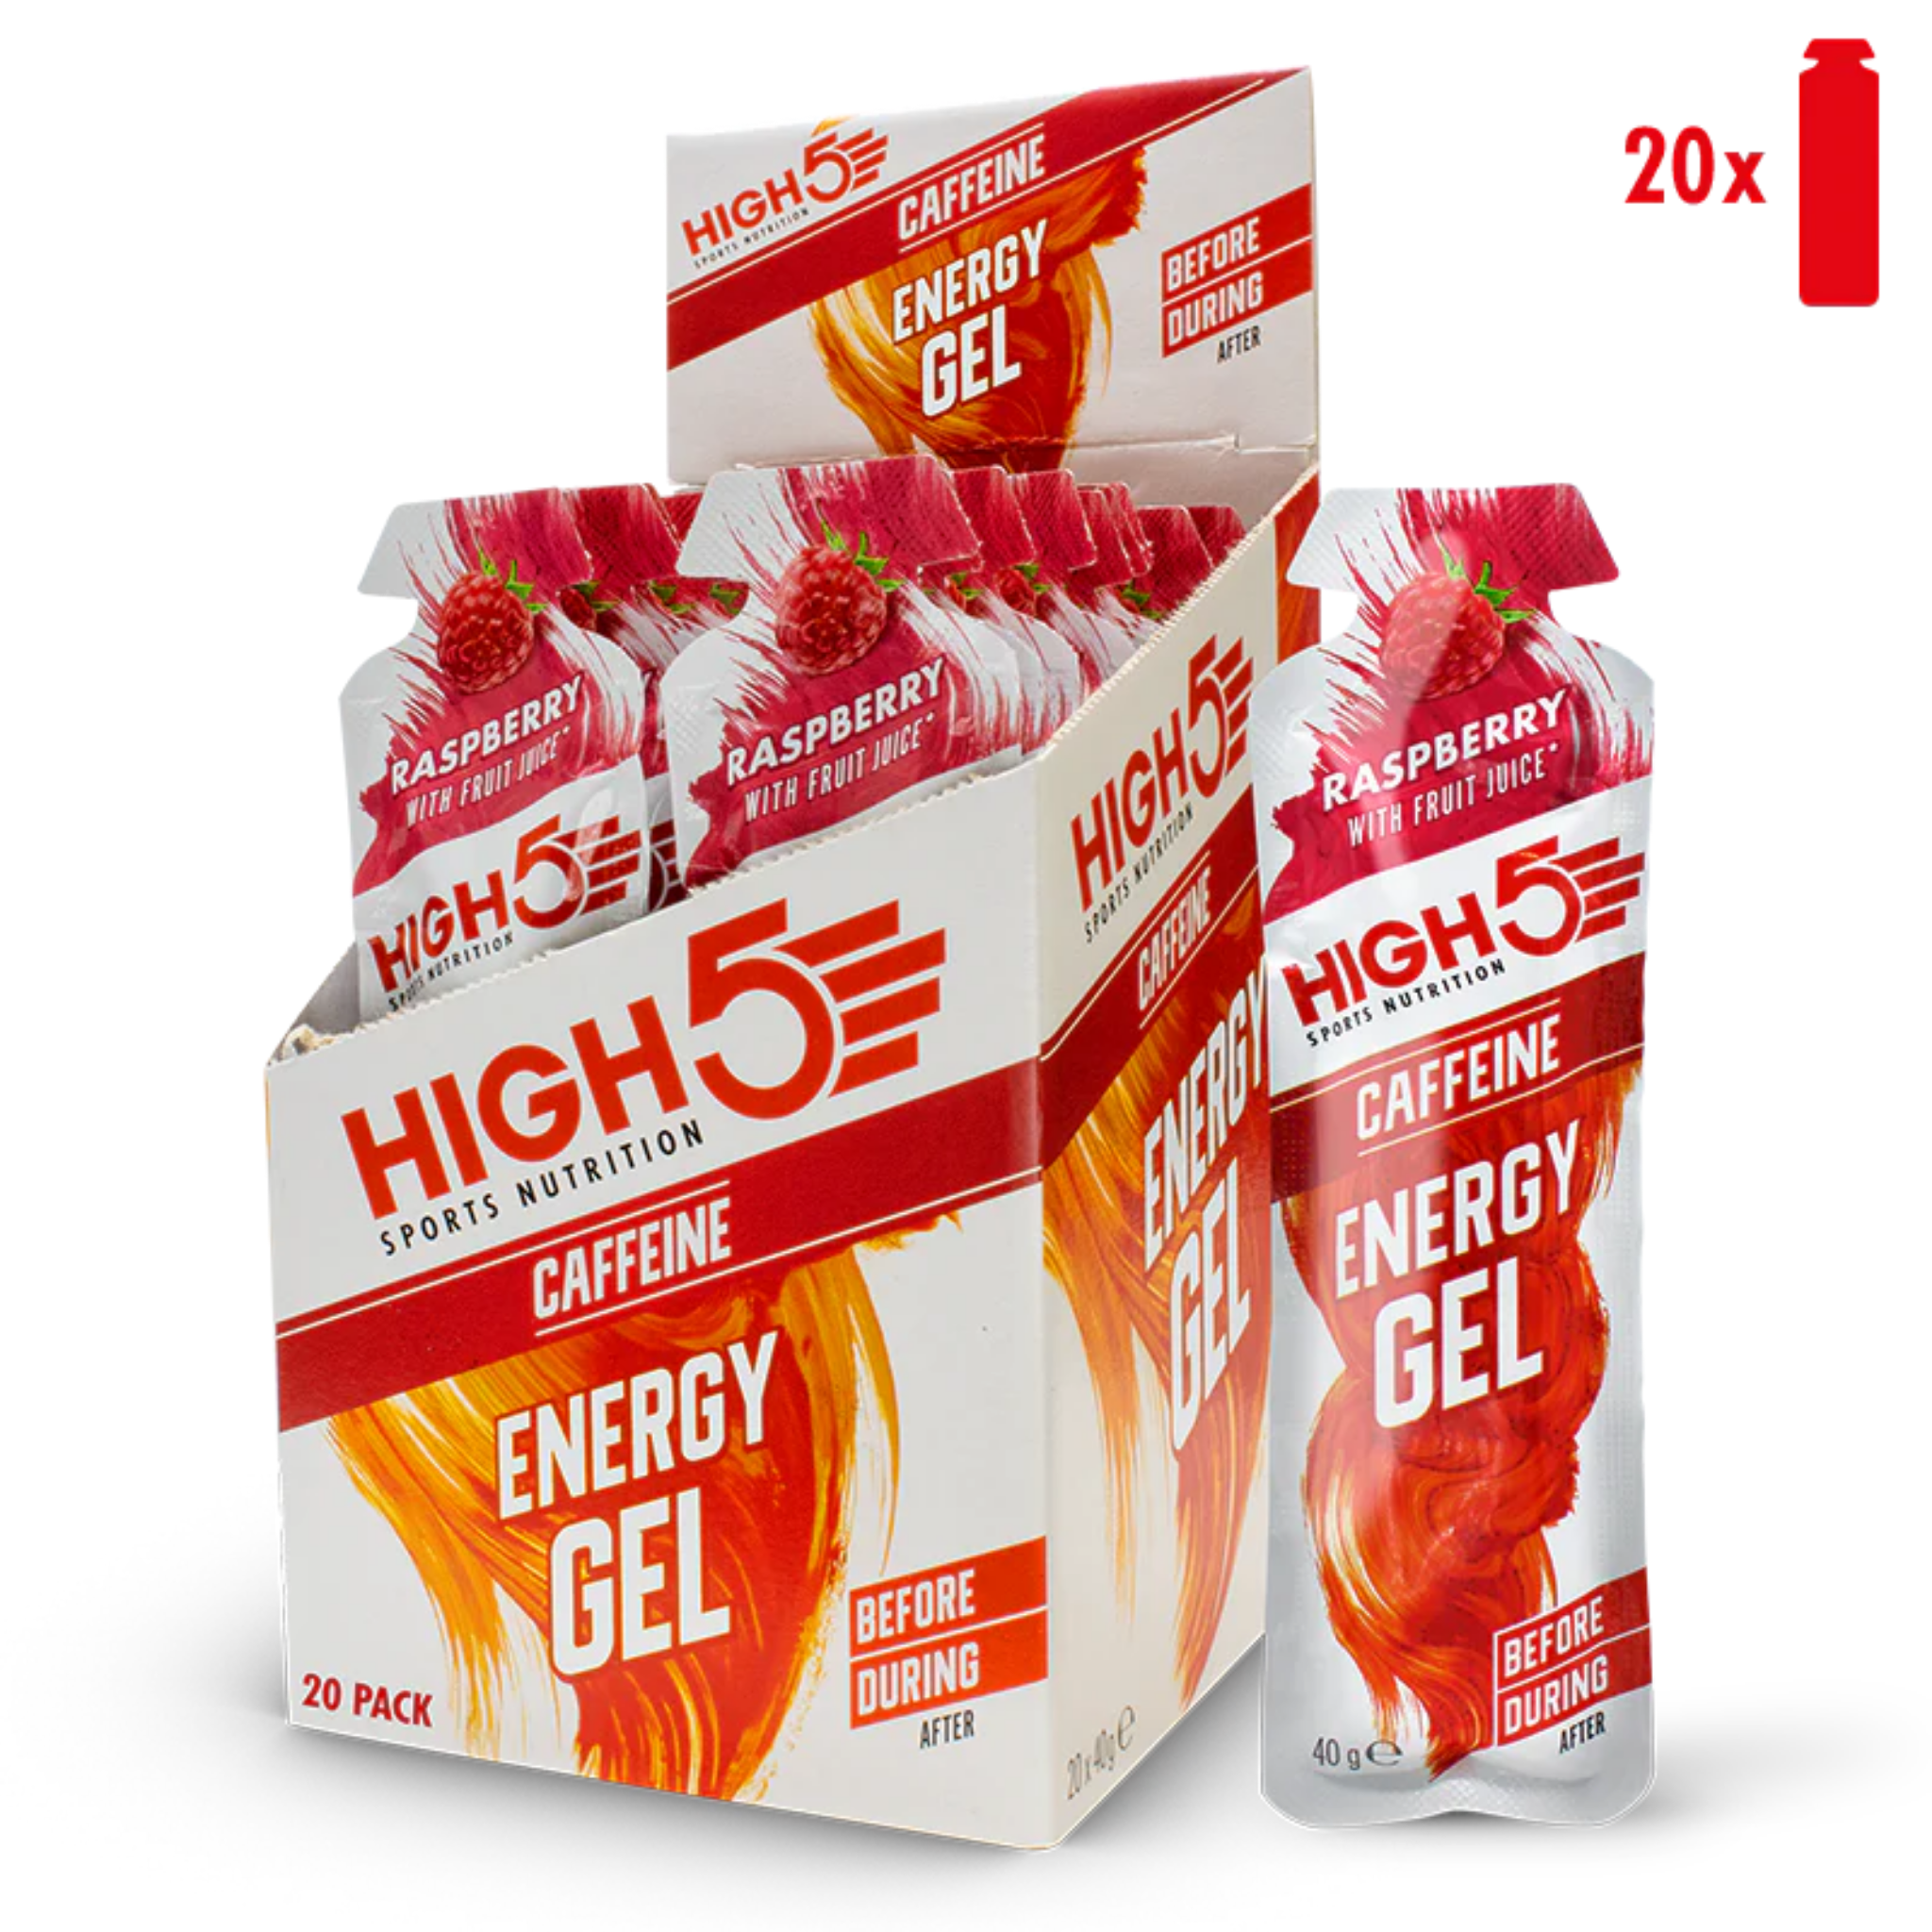 High5 Energi gel Koffein Raspberry (20x40g)